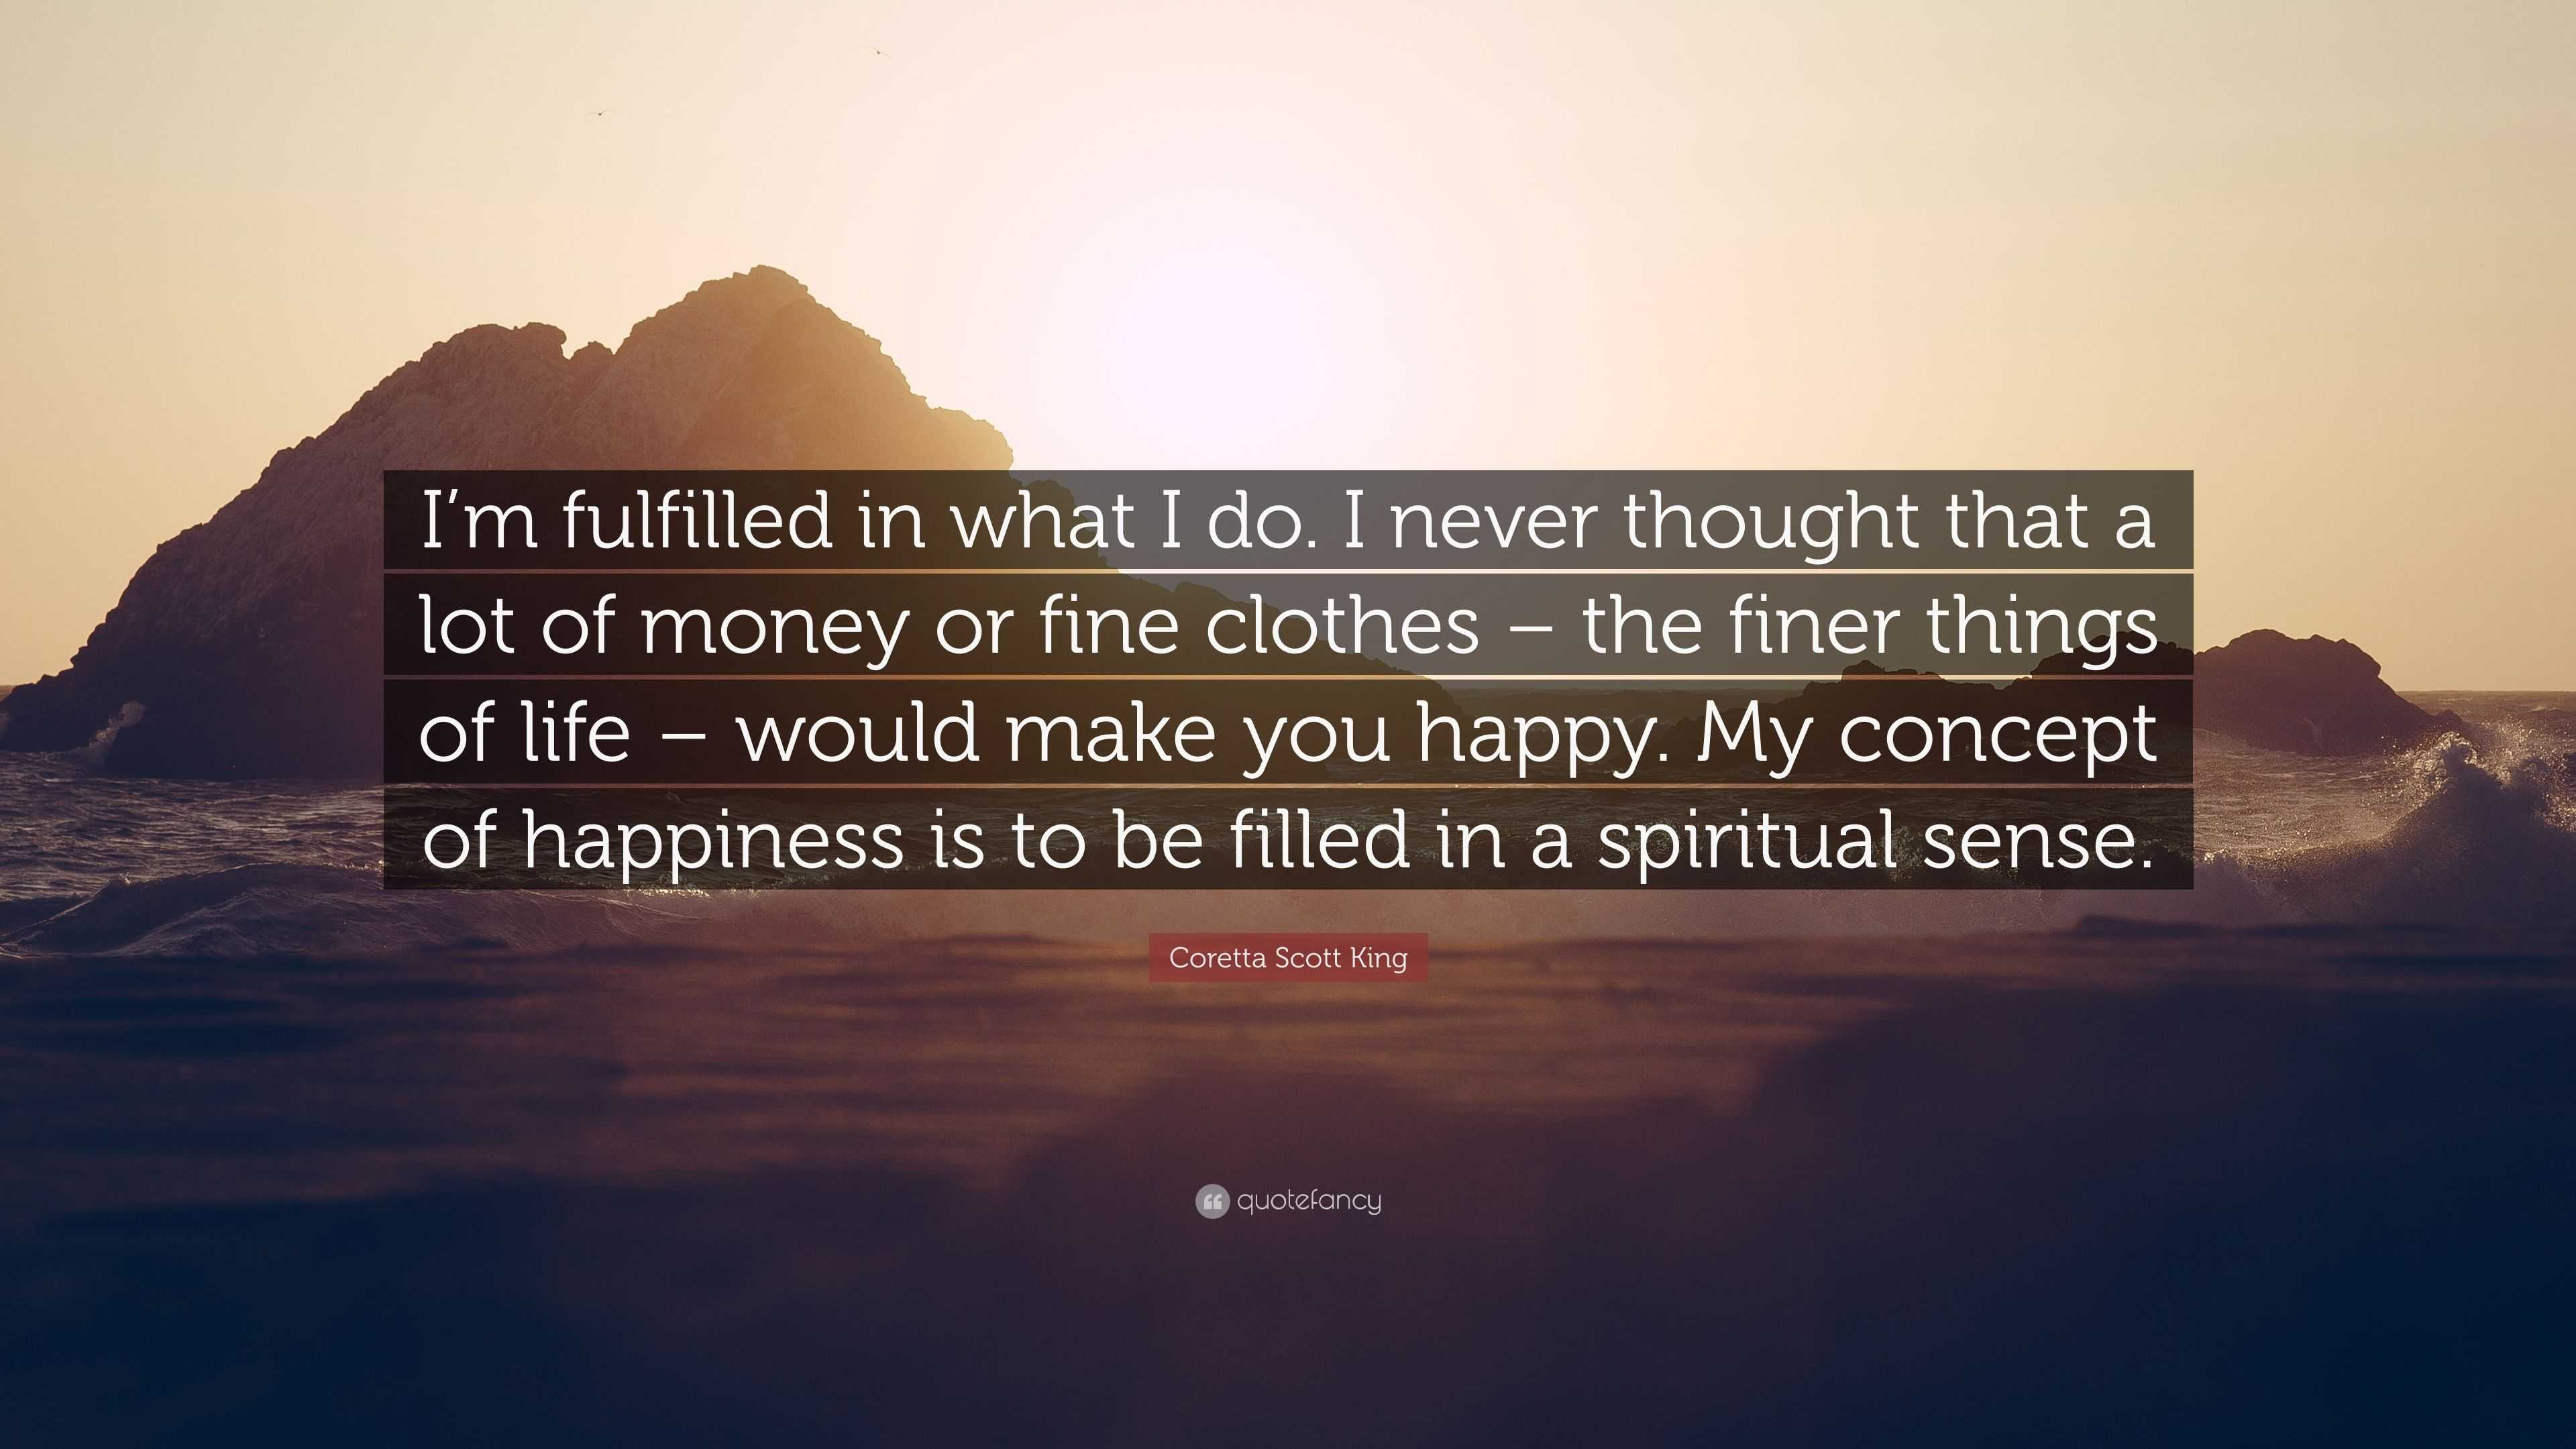 Coretta Scott King Quote “I m fulfilled in what I do I